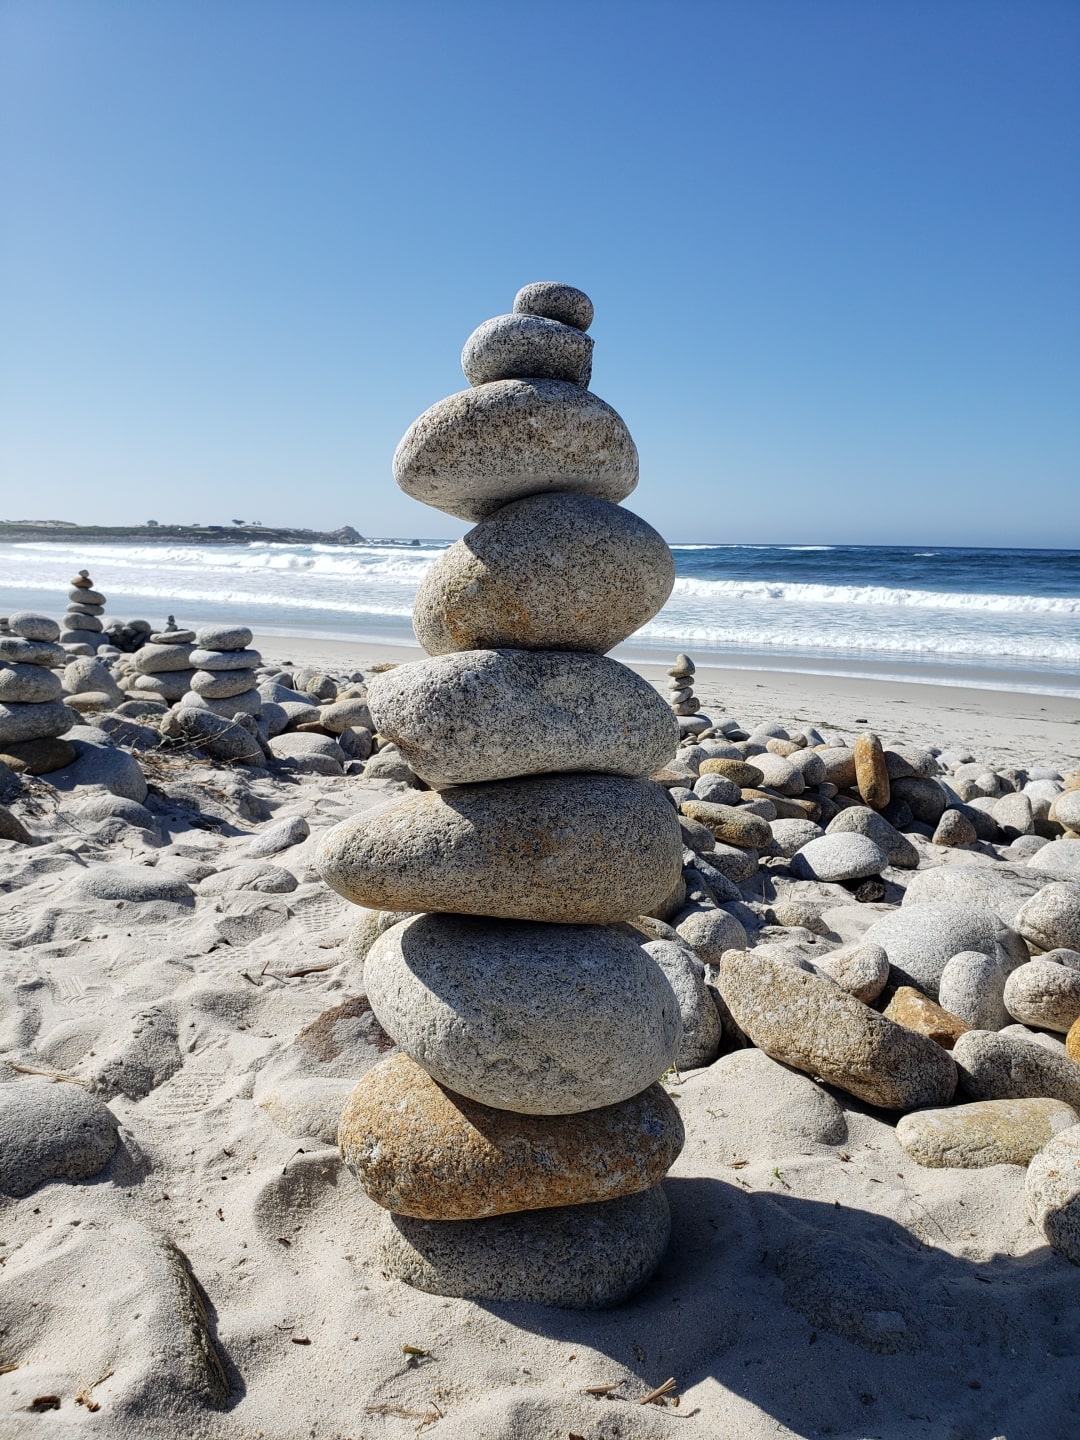 Centering Prayer rock sculpture at Pebble Beach, CA